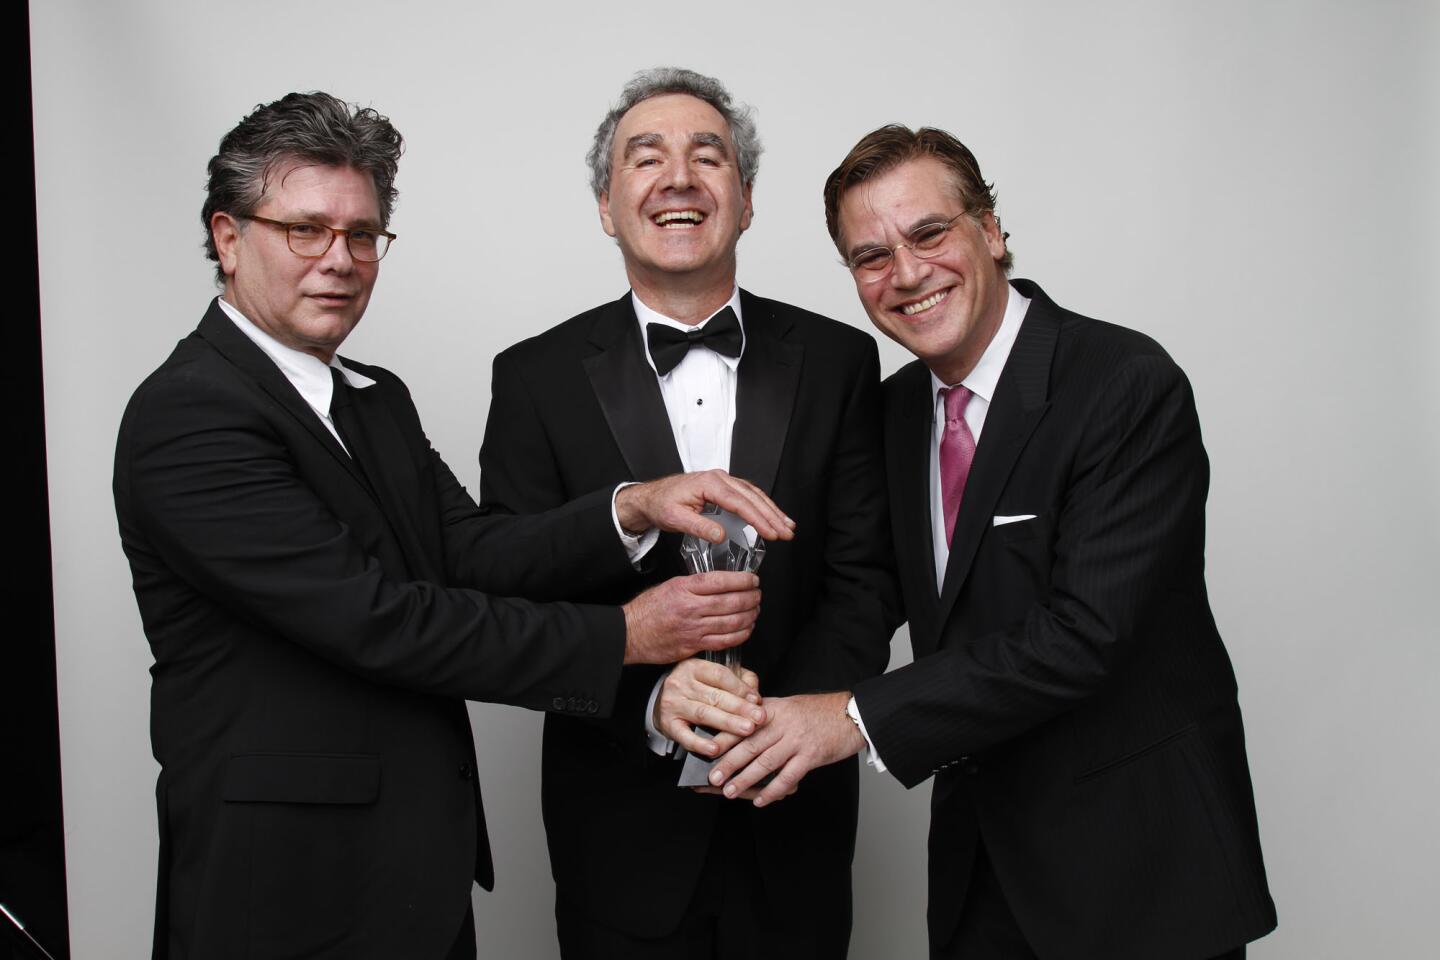 Stan Cherwin, Steven Zaillian and Aaron Sorkin won best adapted screenplay for their work on "Moneyball."